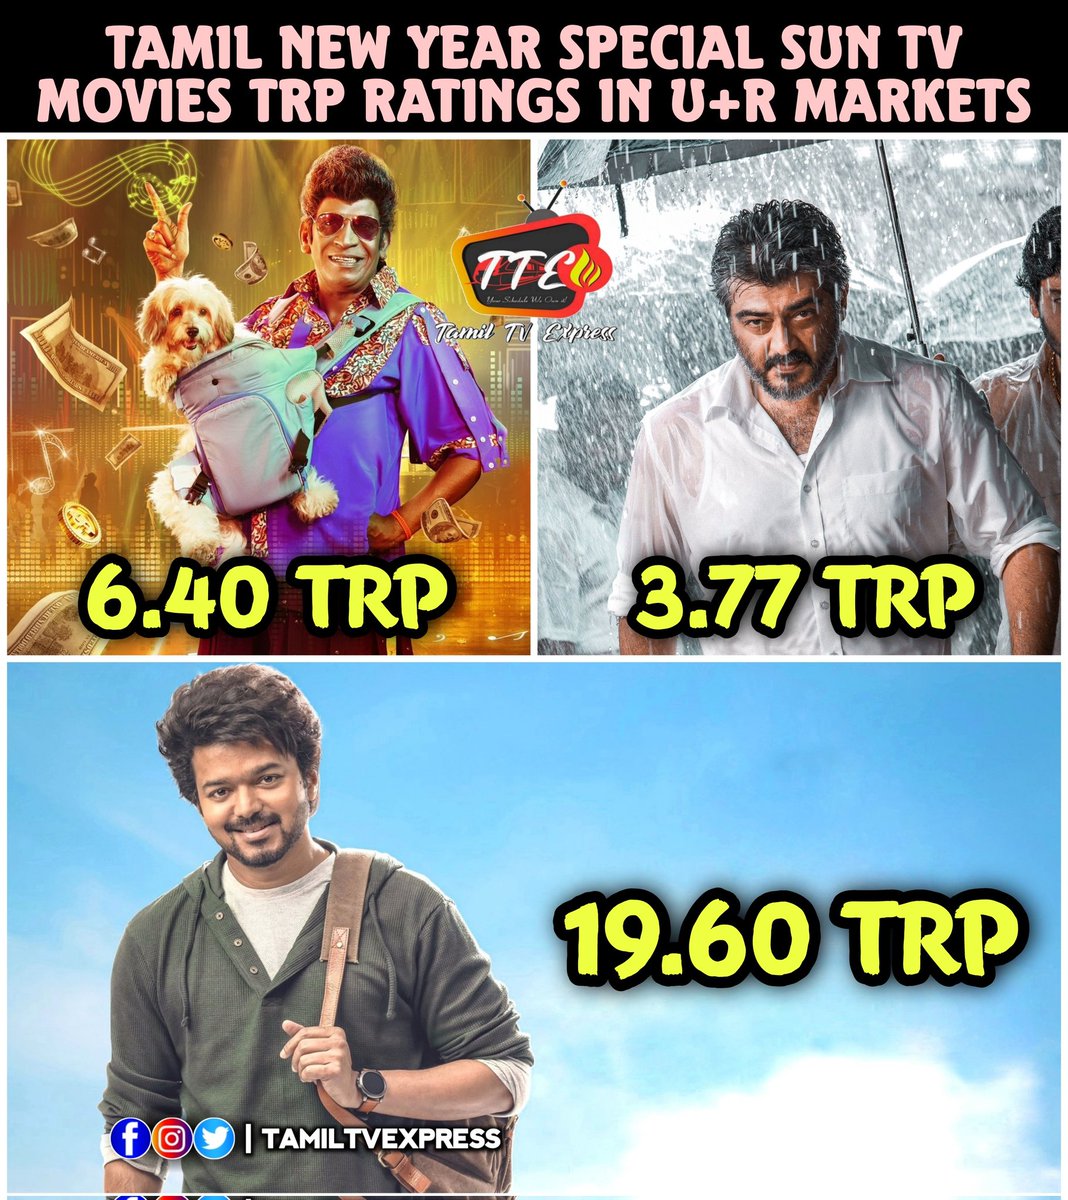 #SunTV Tamil New Year Special Movies TRP Ratings In U+R Markets 

#NaaiSekarReturns -- 6.40
#Veeram -- 3.77
#Varisu -- 19.60

#Vadivelu #Ajith #AjithKumar #ThalapathyVijay